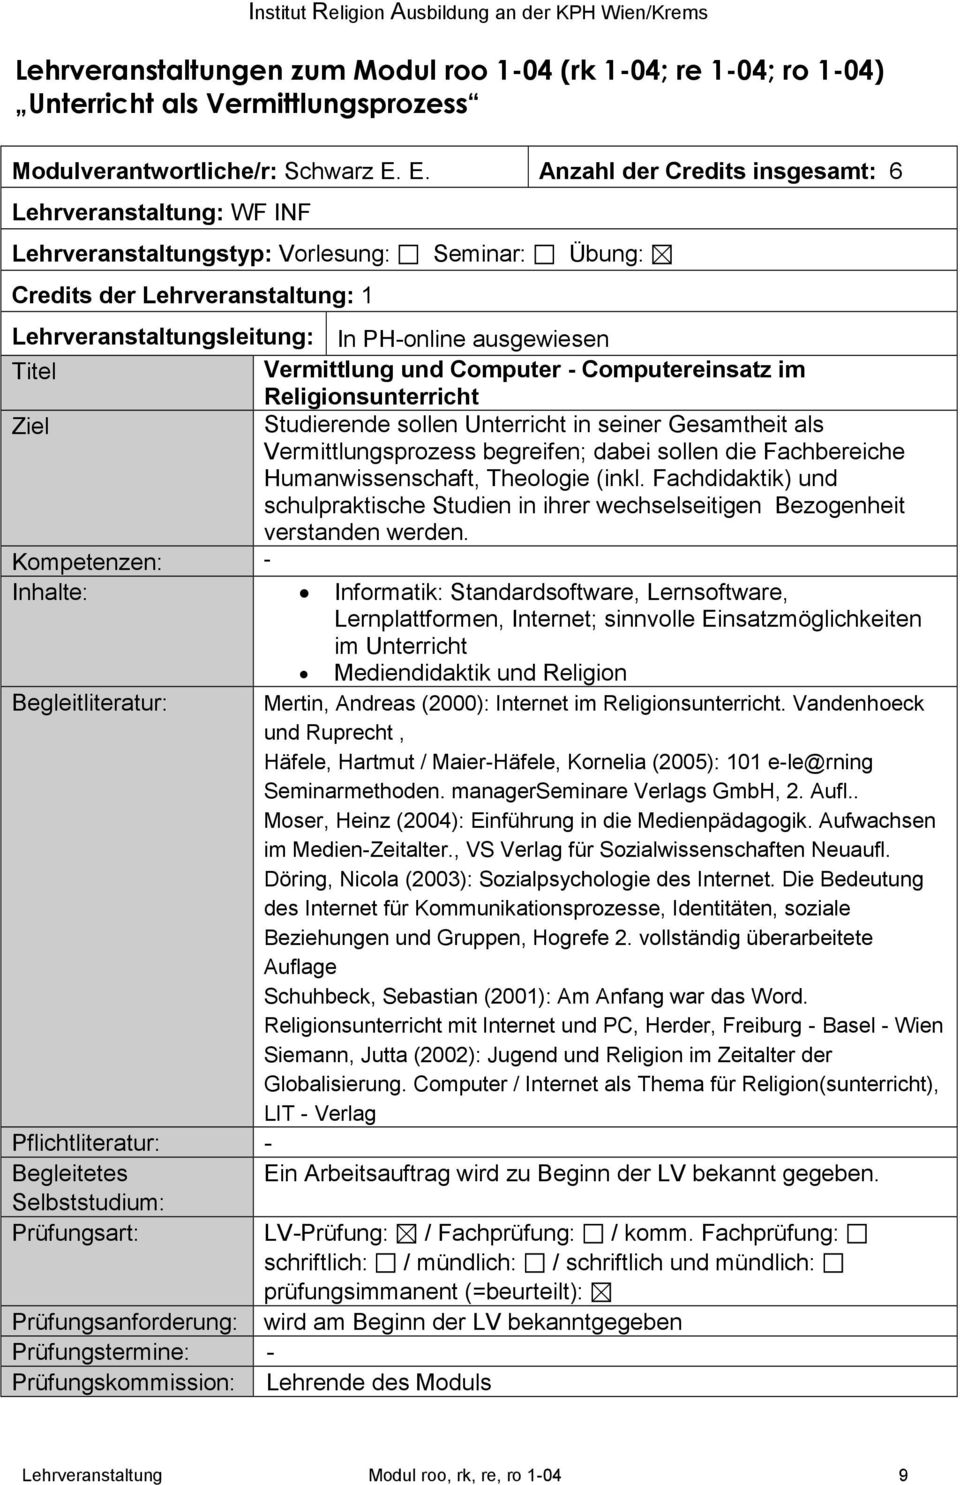 Vandenhoeck und Ruprecht, Häfele, Hartmut / Maier-Häfele, Kornelia (2005): 101 e-le@rning Seminarmethoden. managerseminare Verlags GmbH, 2. Aufl.